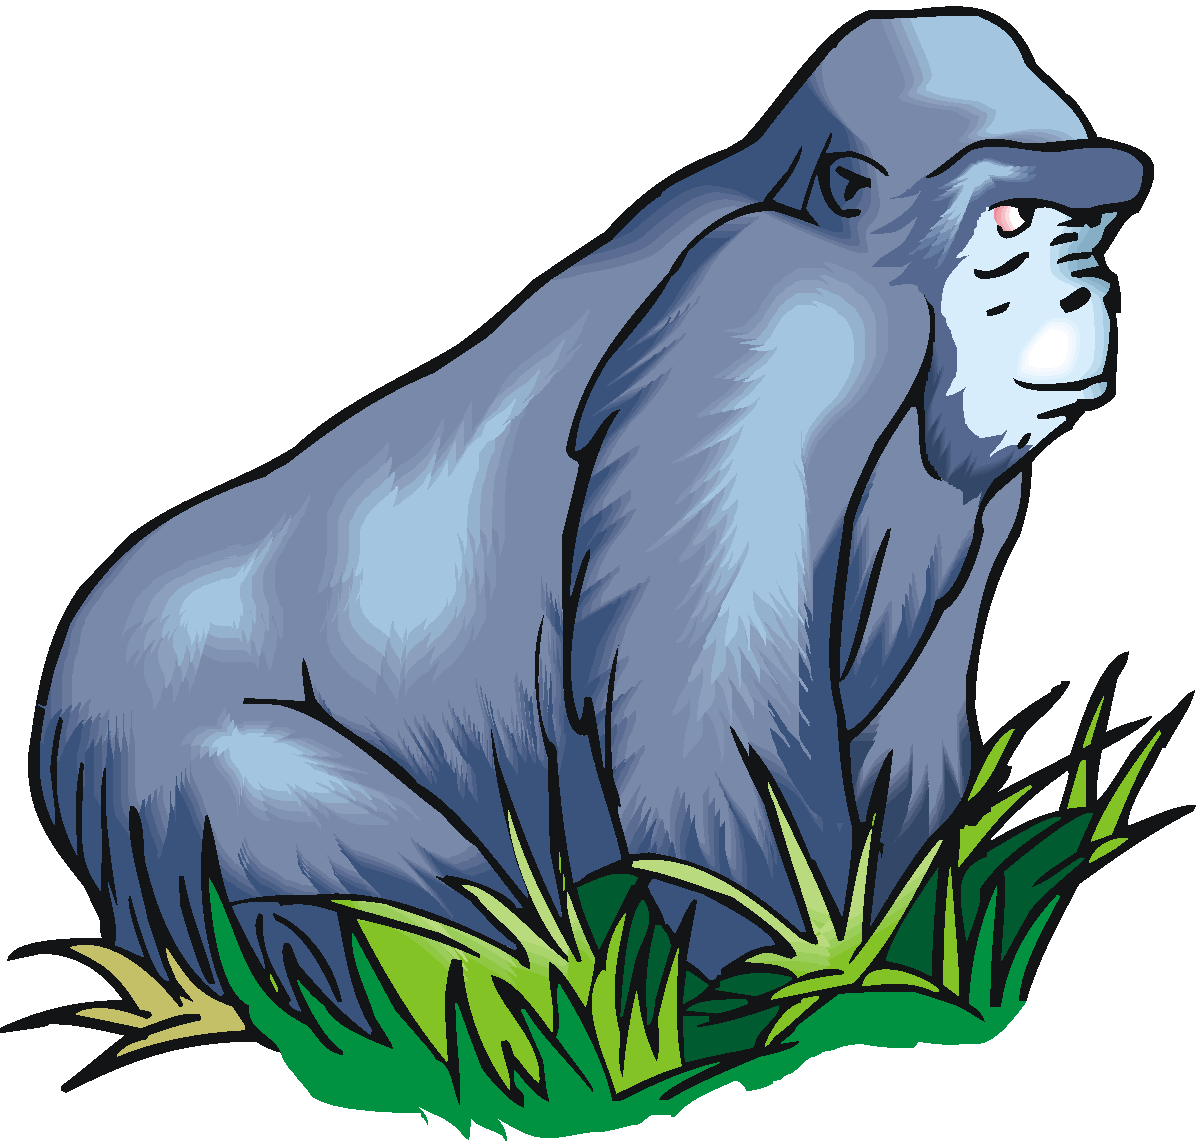 Gorilla Clip Art | Clipart Panda - Free Clipart Images